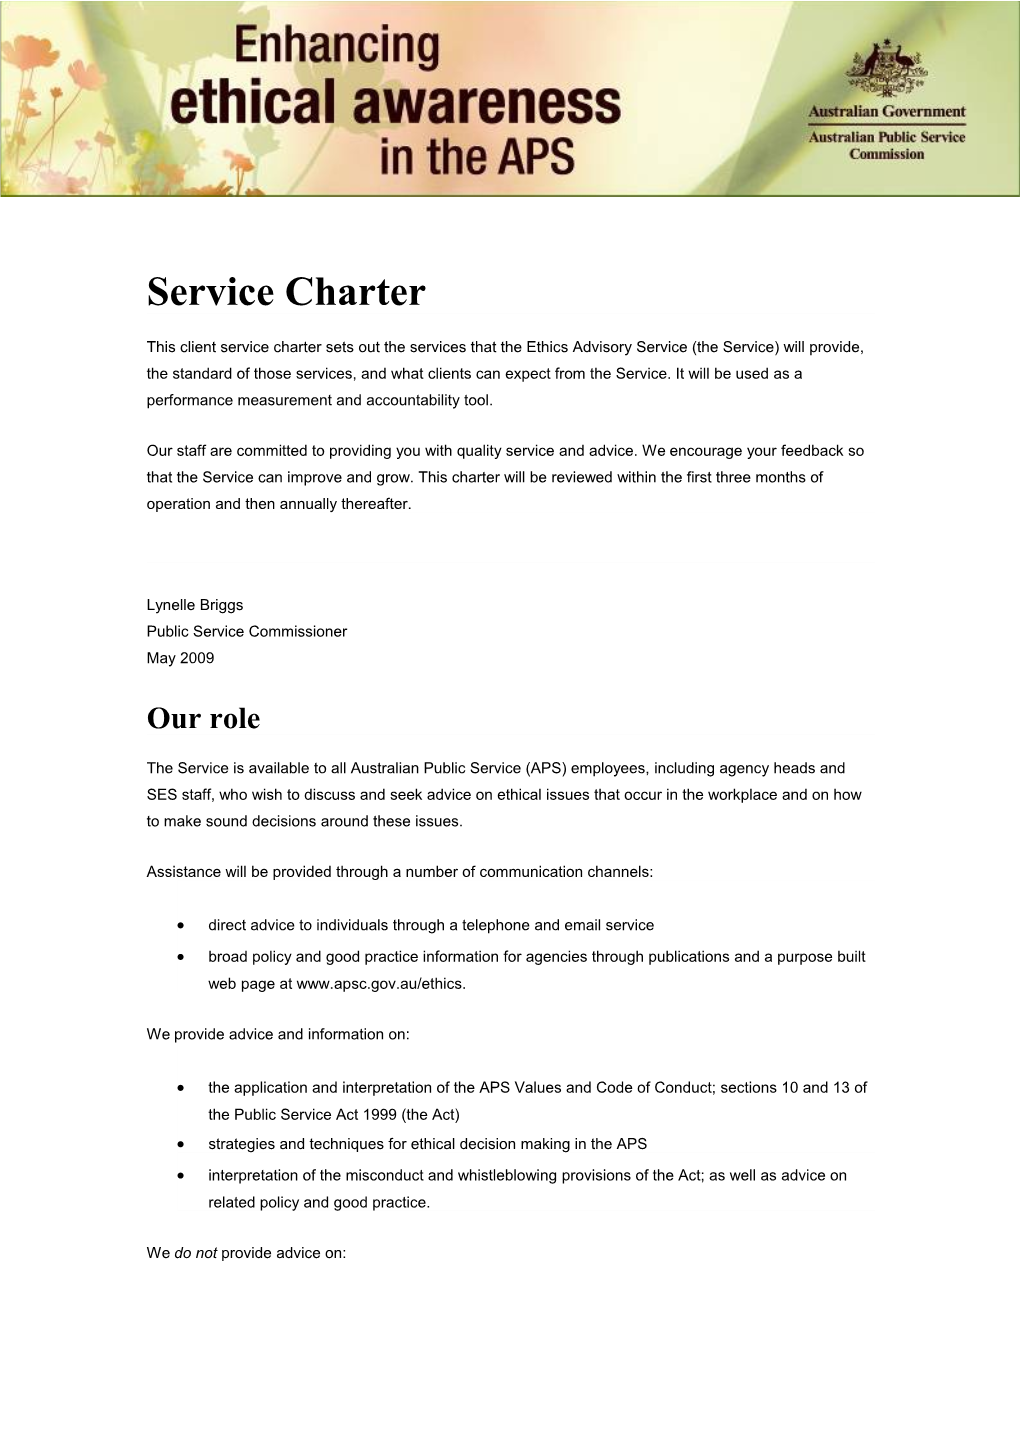 Service Charter